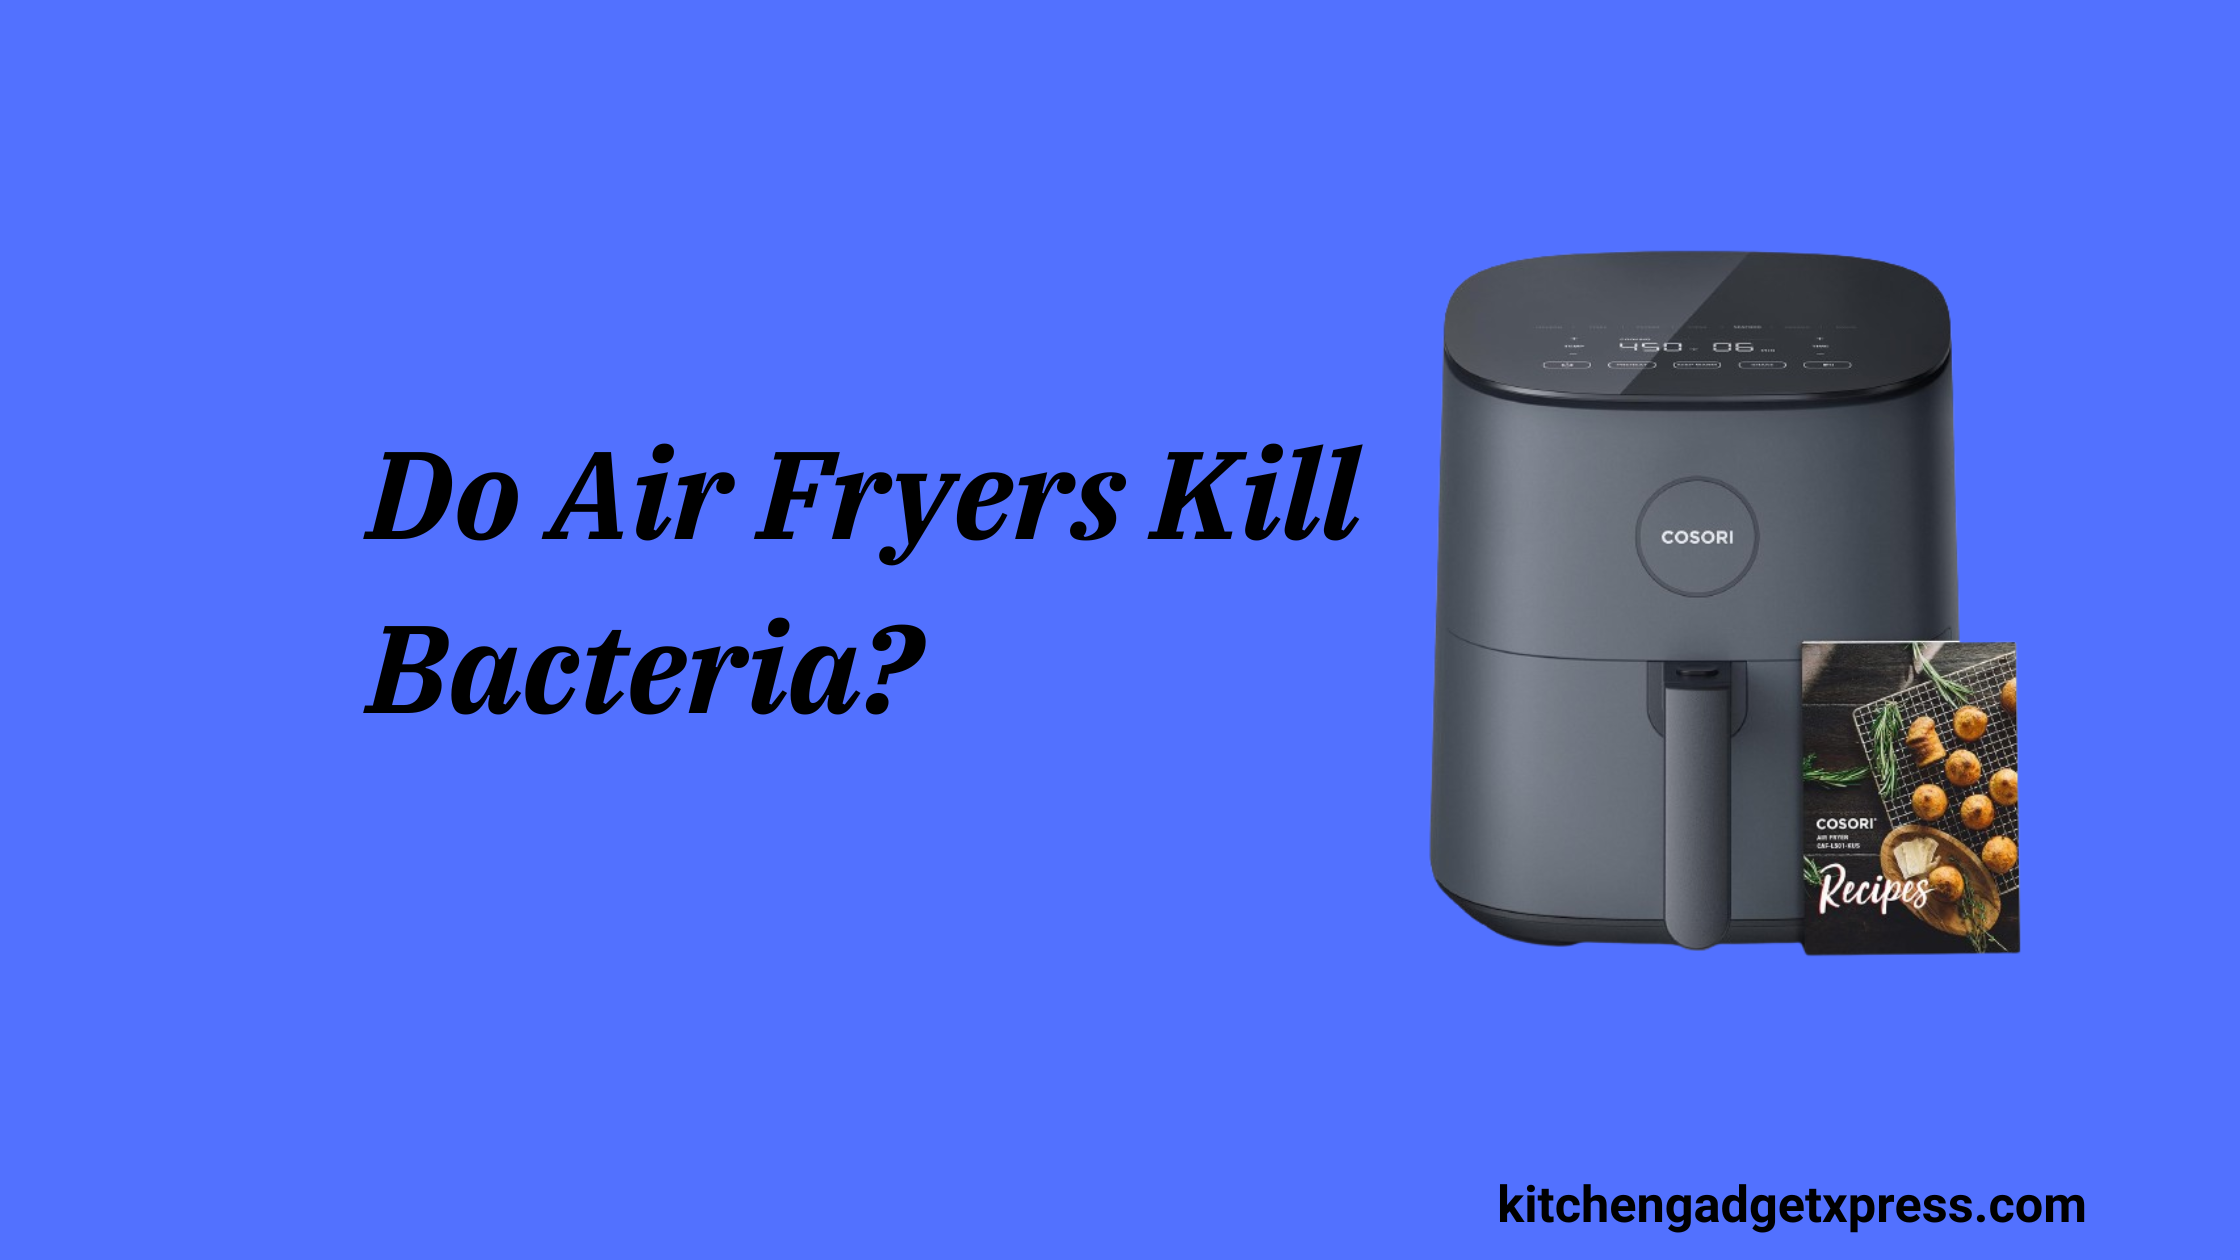 Do Air Fryers Kill Bacteria?